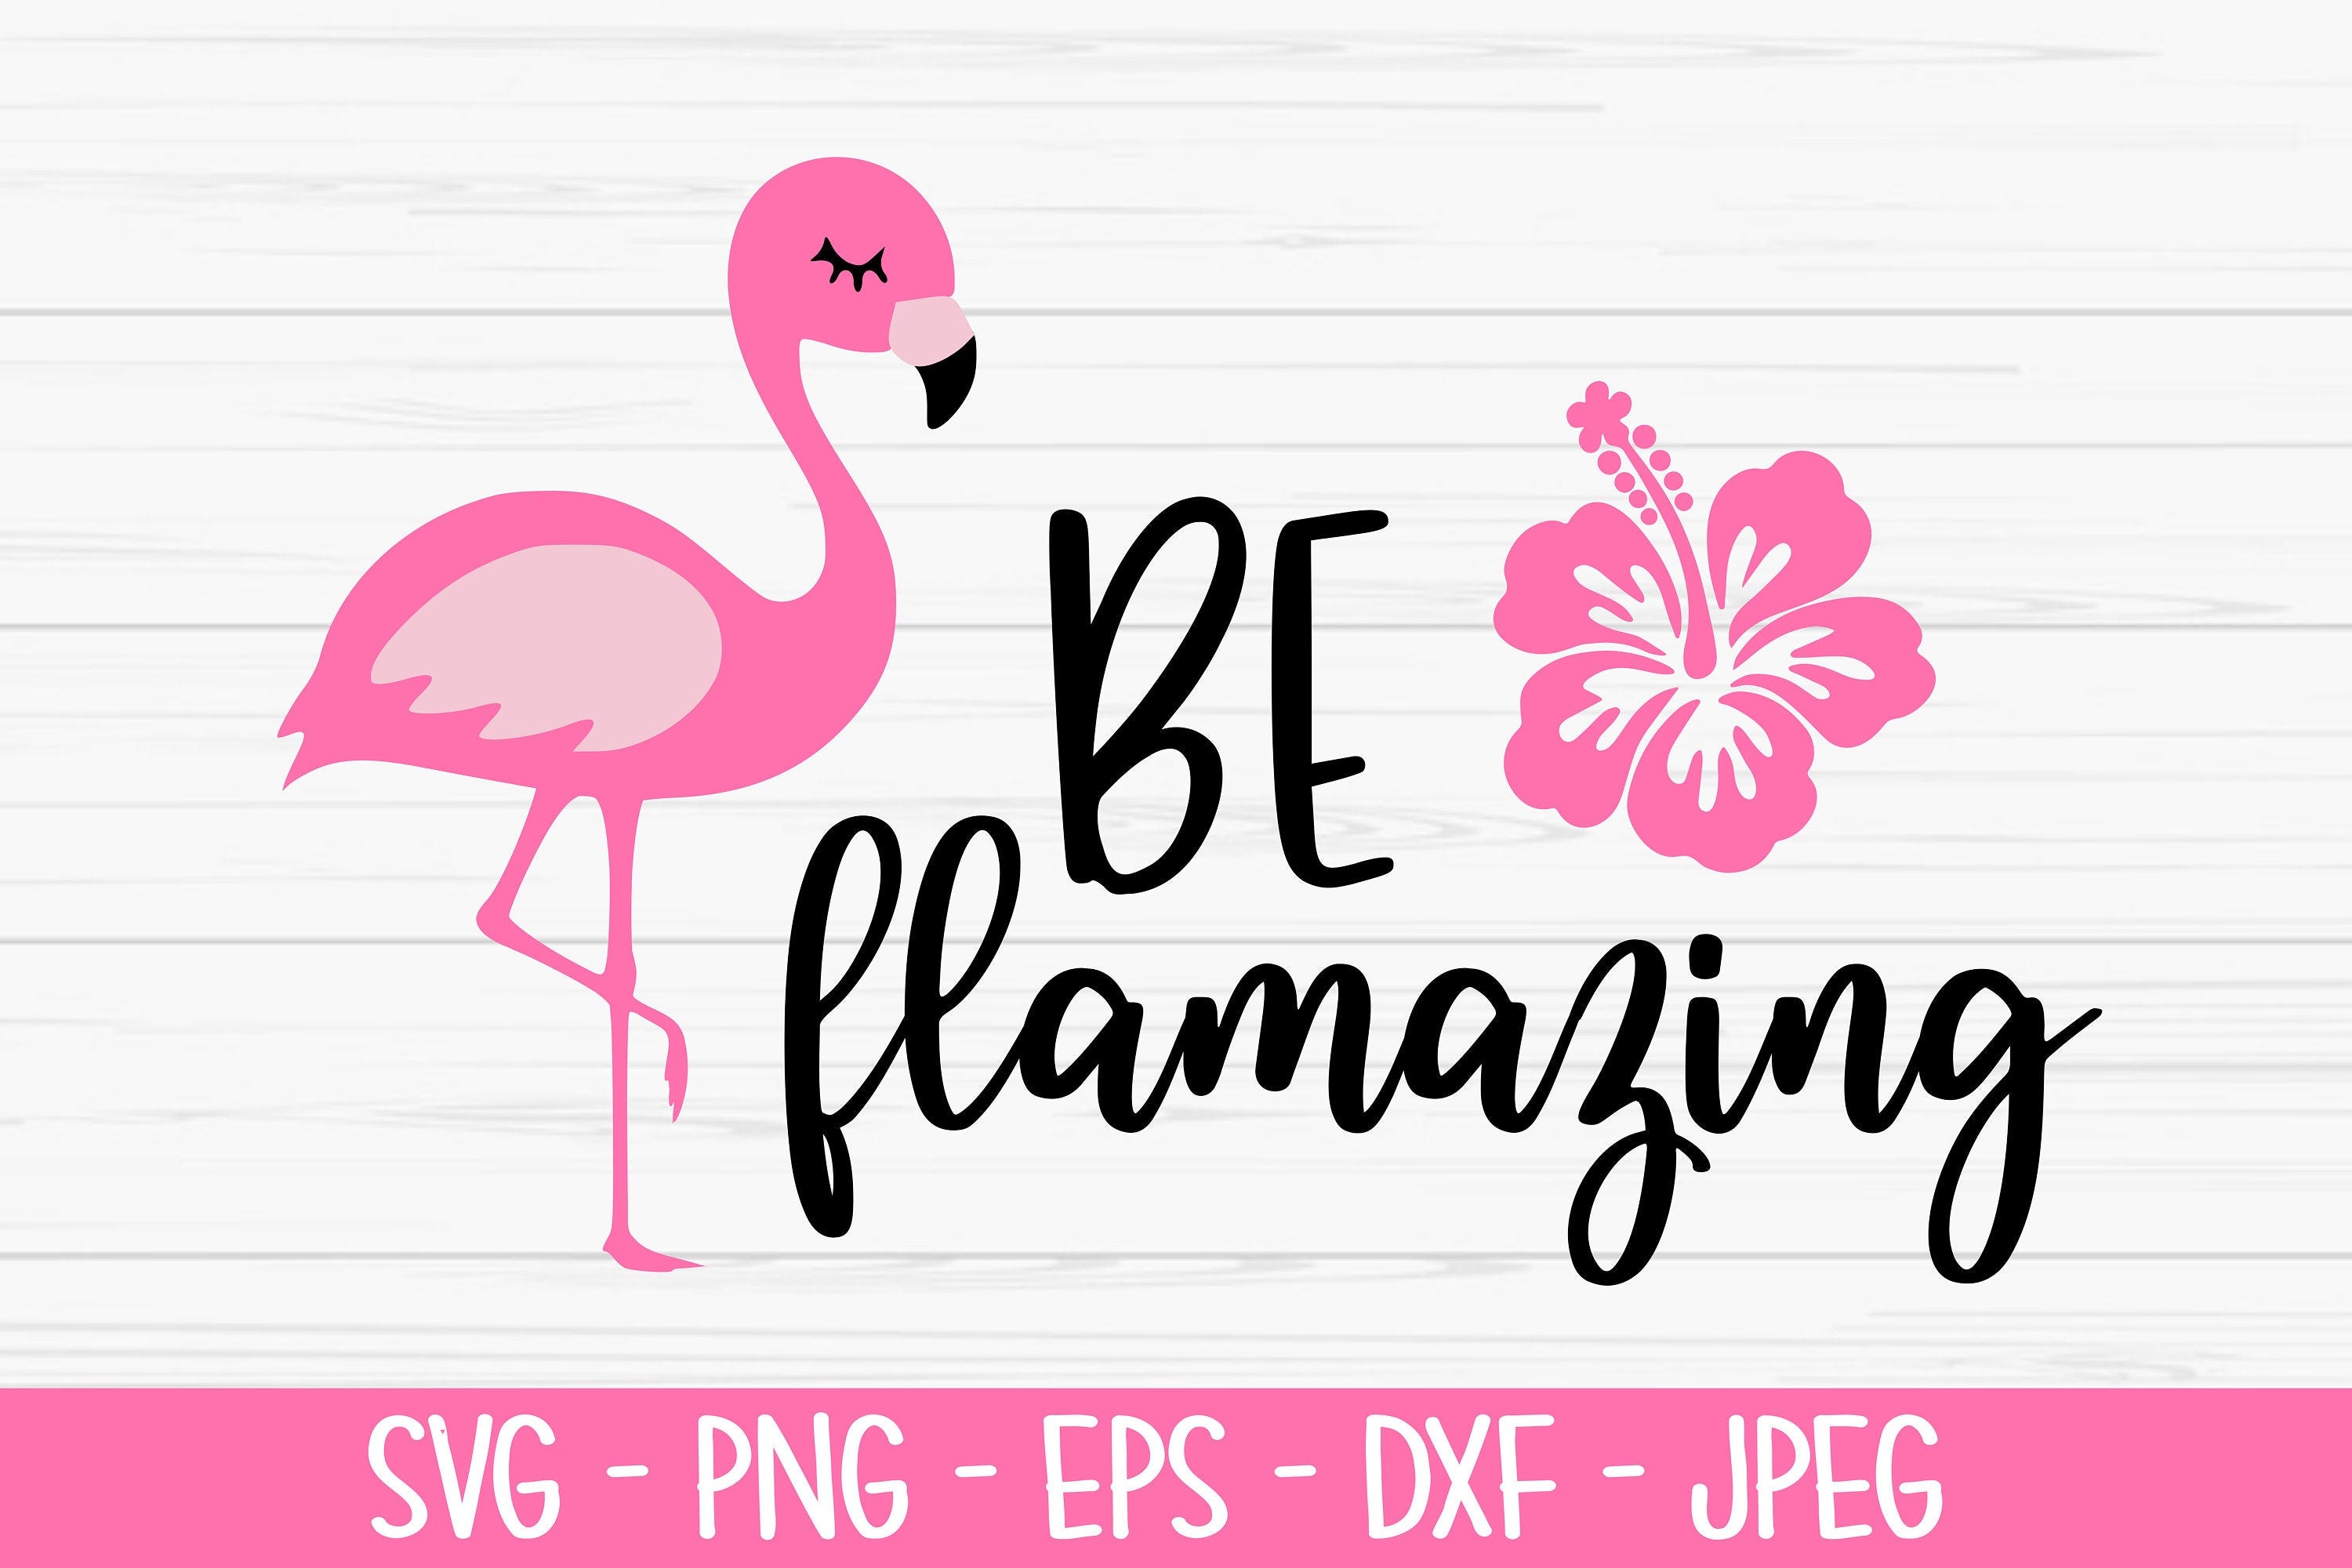 be flamazing svg, summer svg, flamingo svg, Dxf, Png, Eps, jpeg, Cut file, Cricut, Silhouette, Print, Instant download